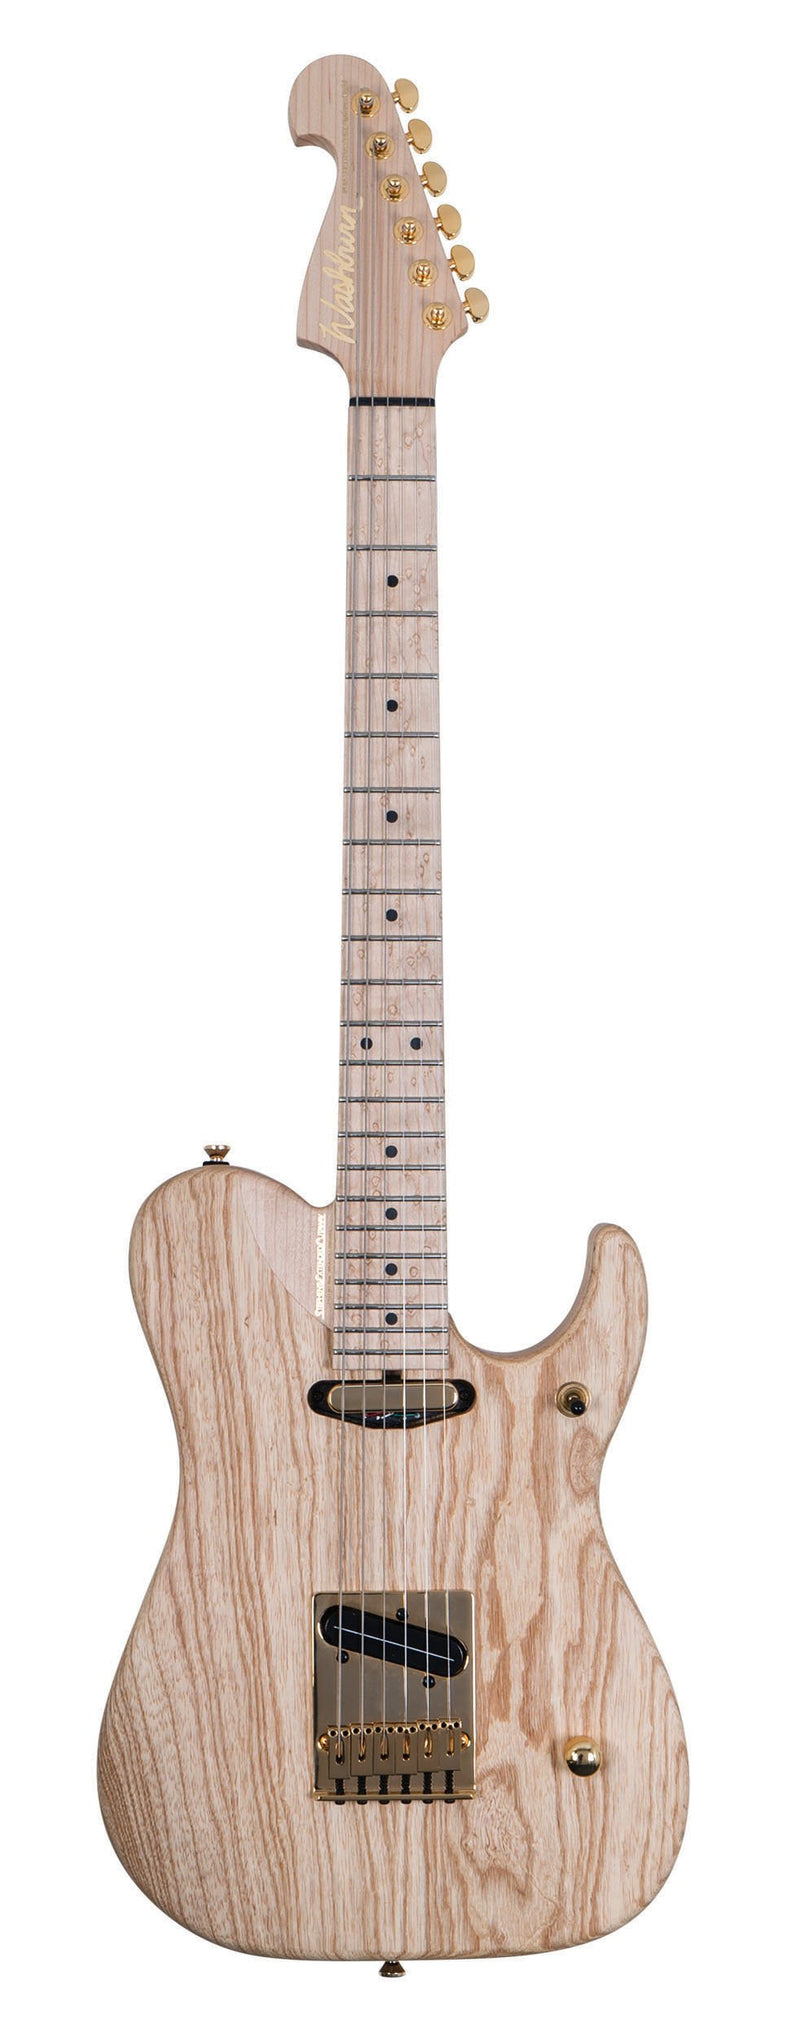 Washburn Nele Standard Electric Guitar - Natural Swamp Ash - NELESTD-M